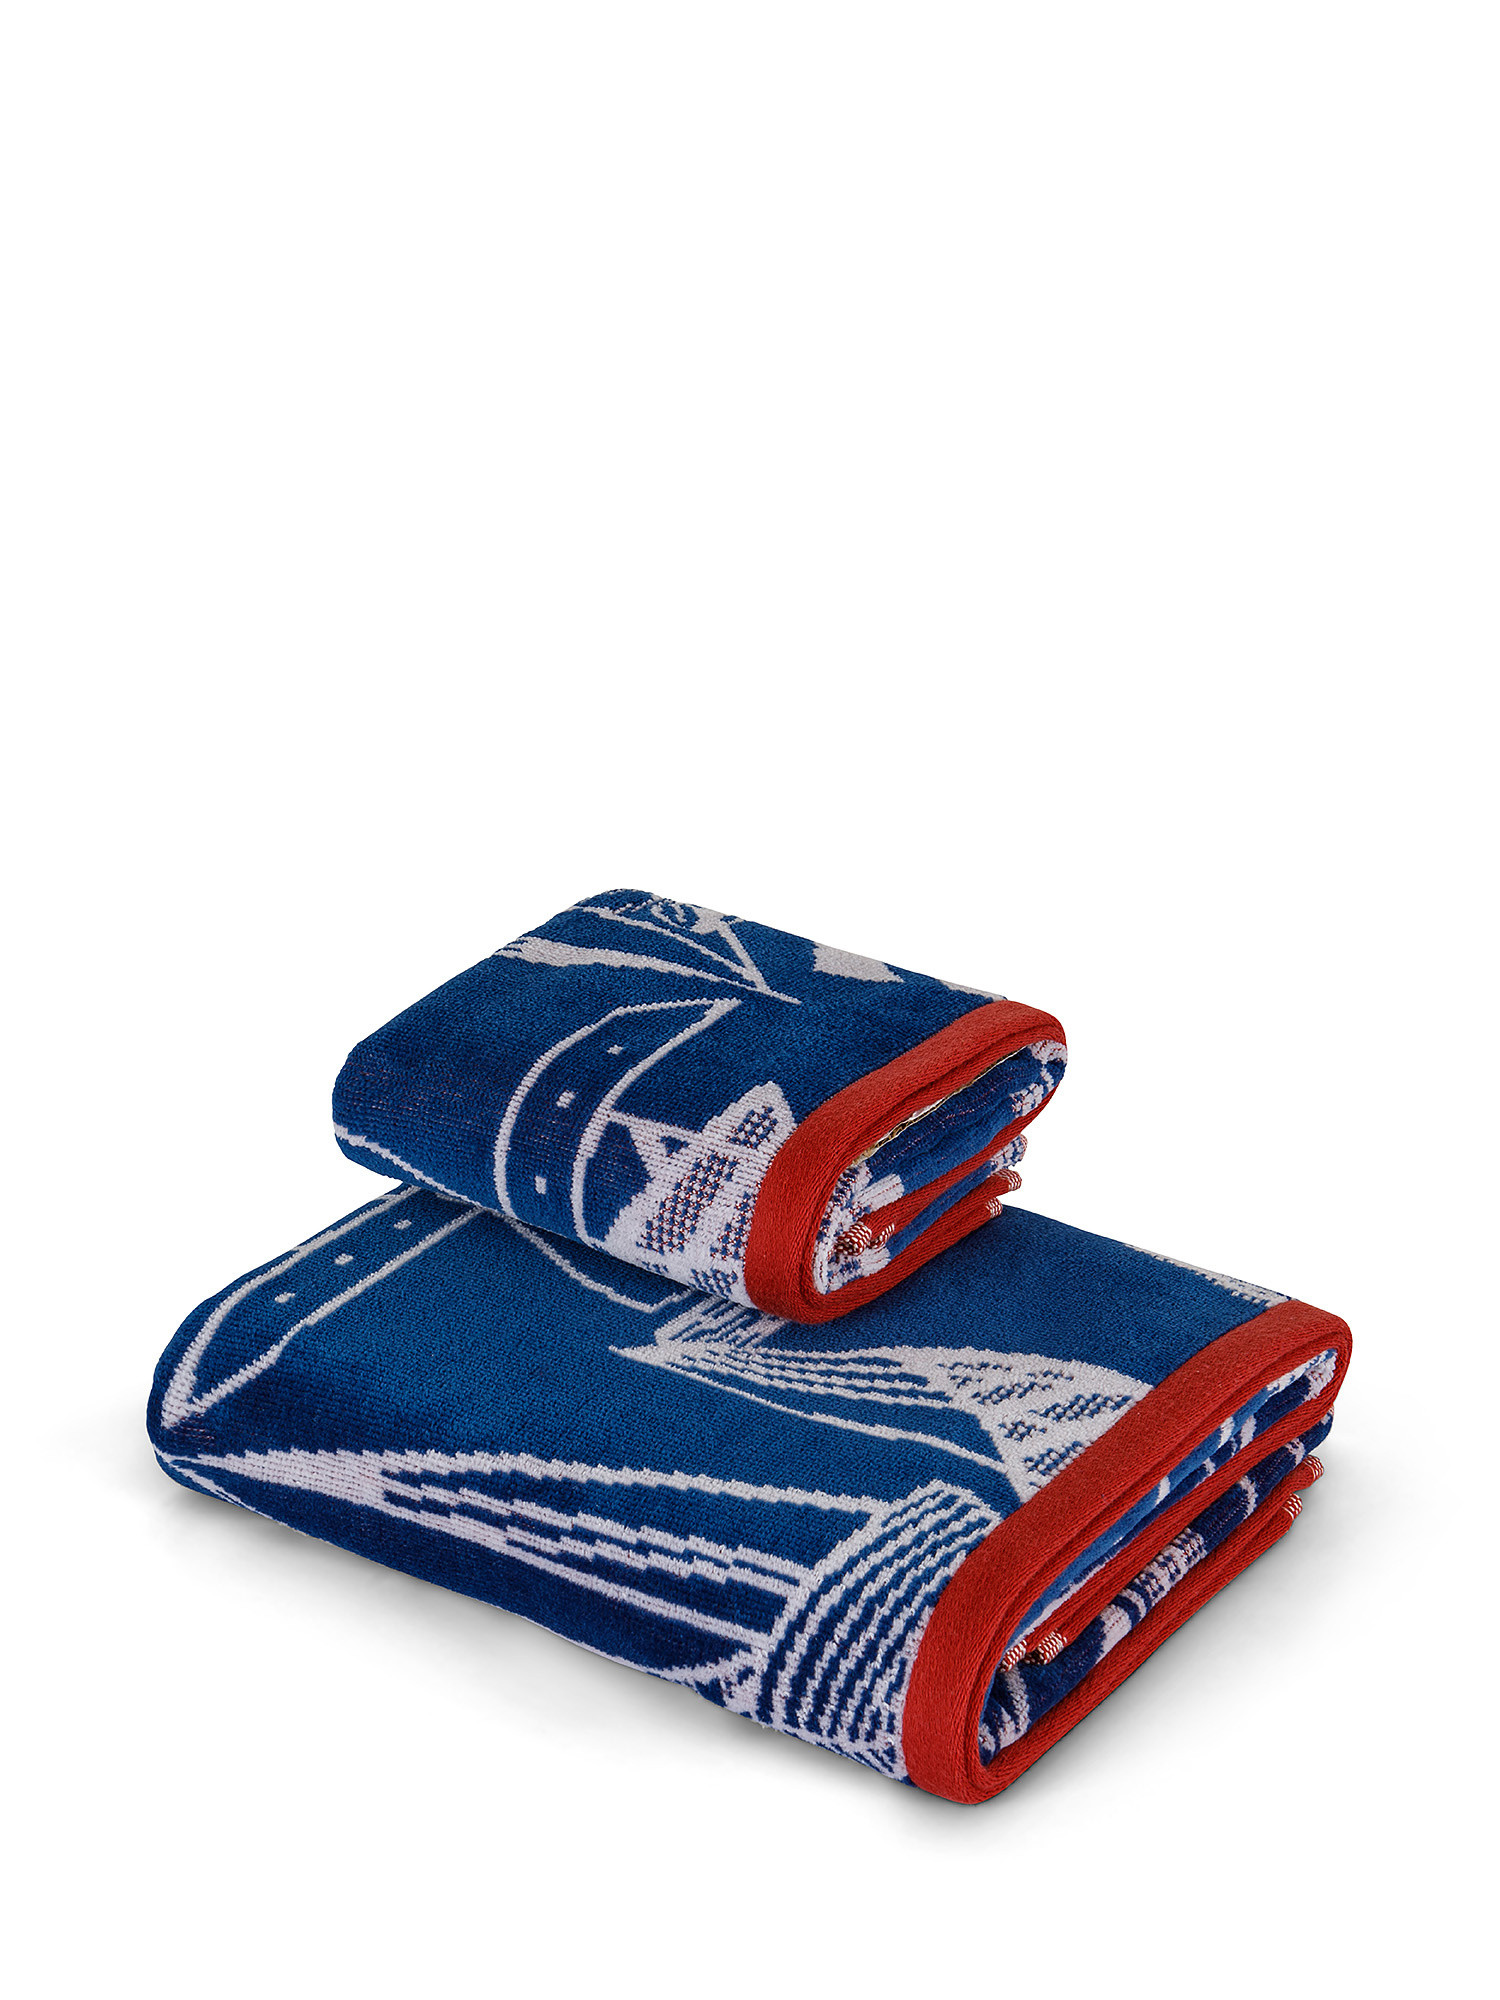 Asciugamano cotone velour motivo barche, Blu, large image number 0